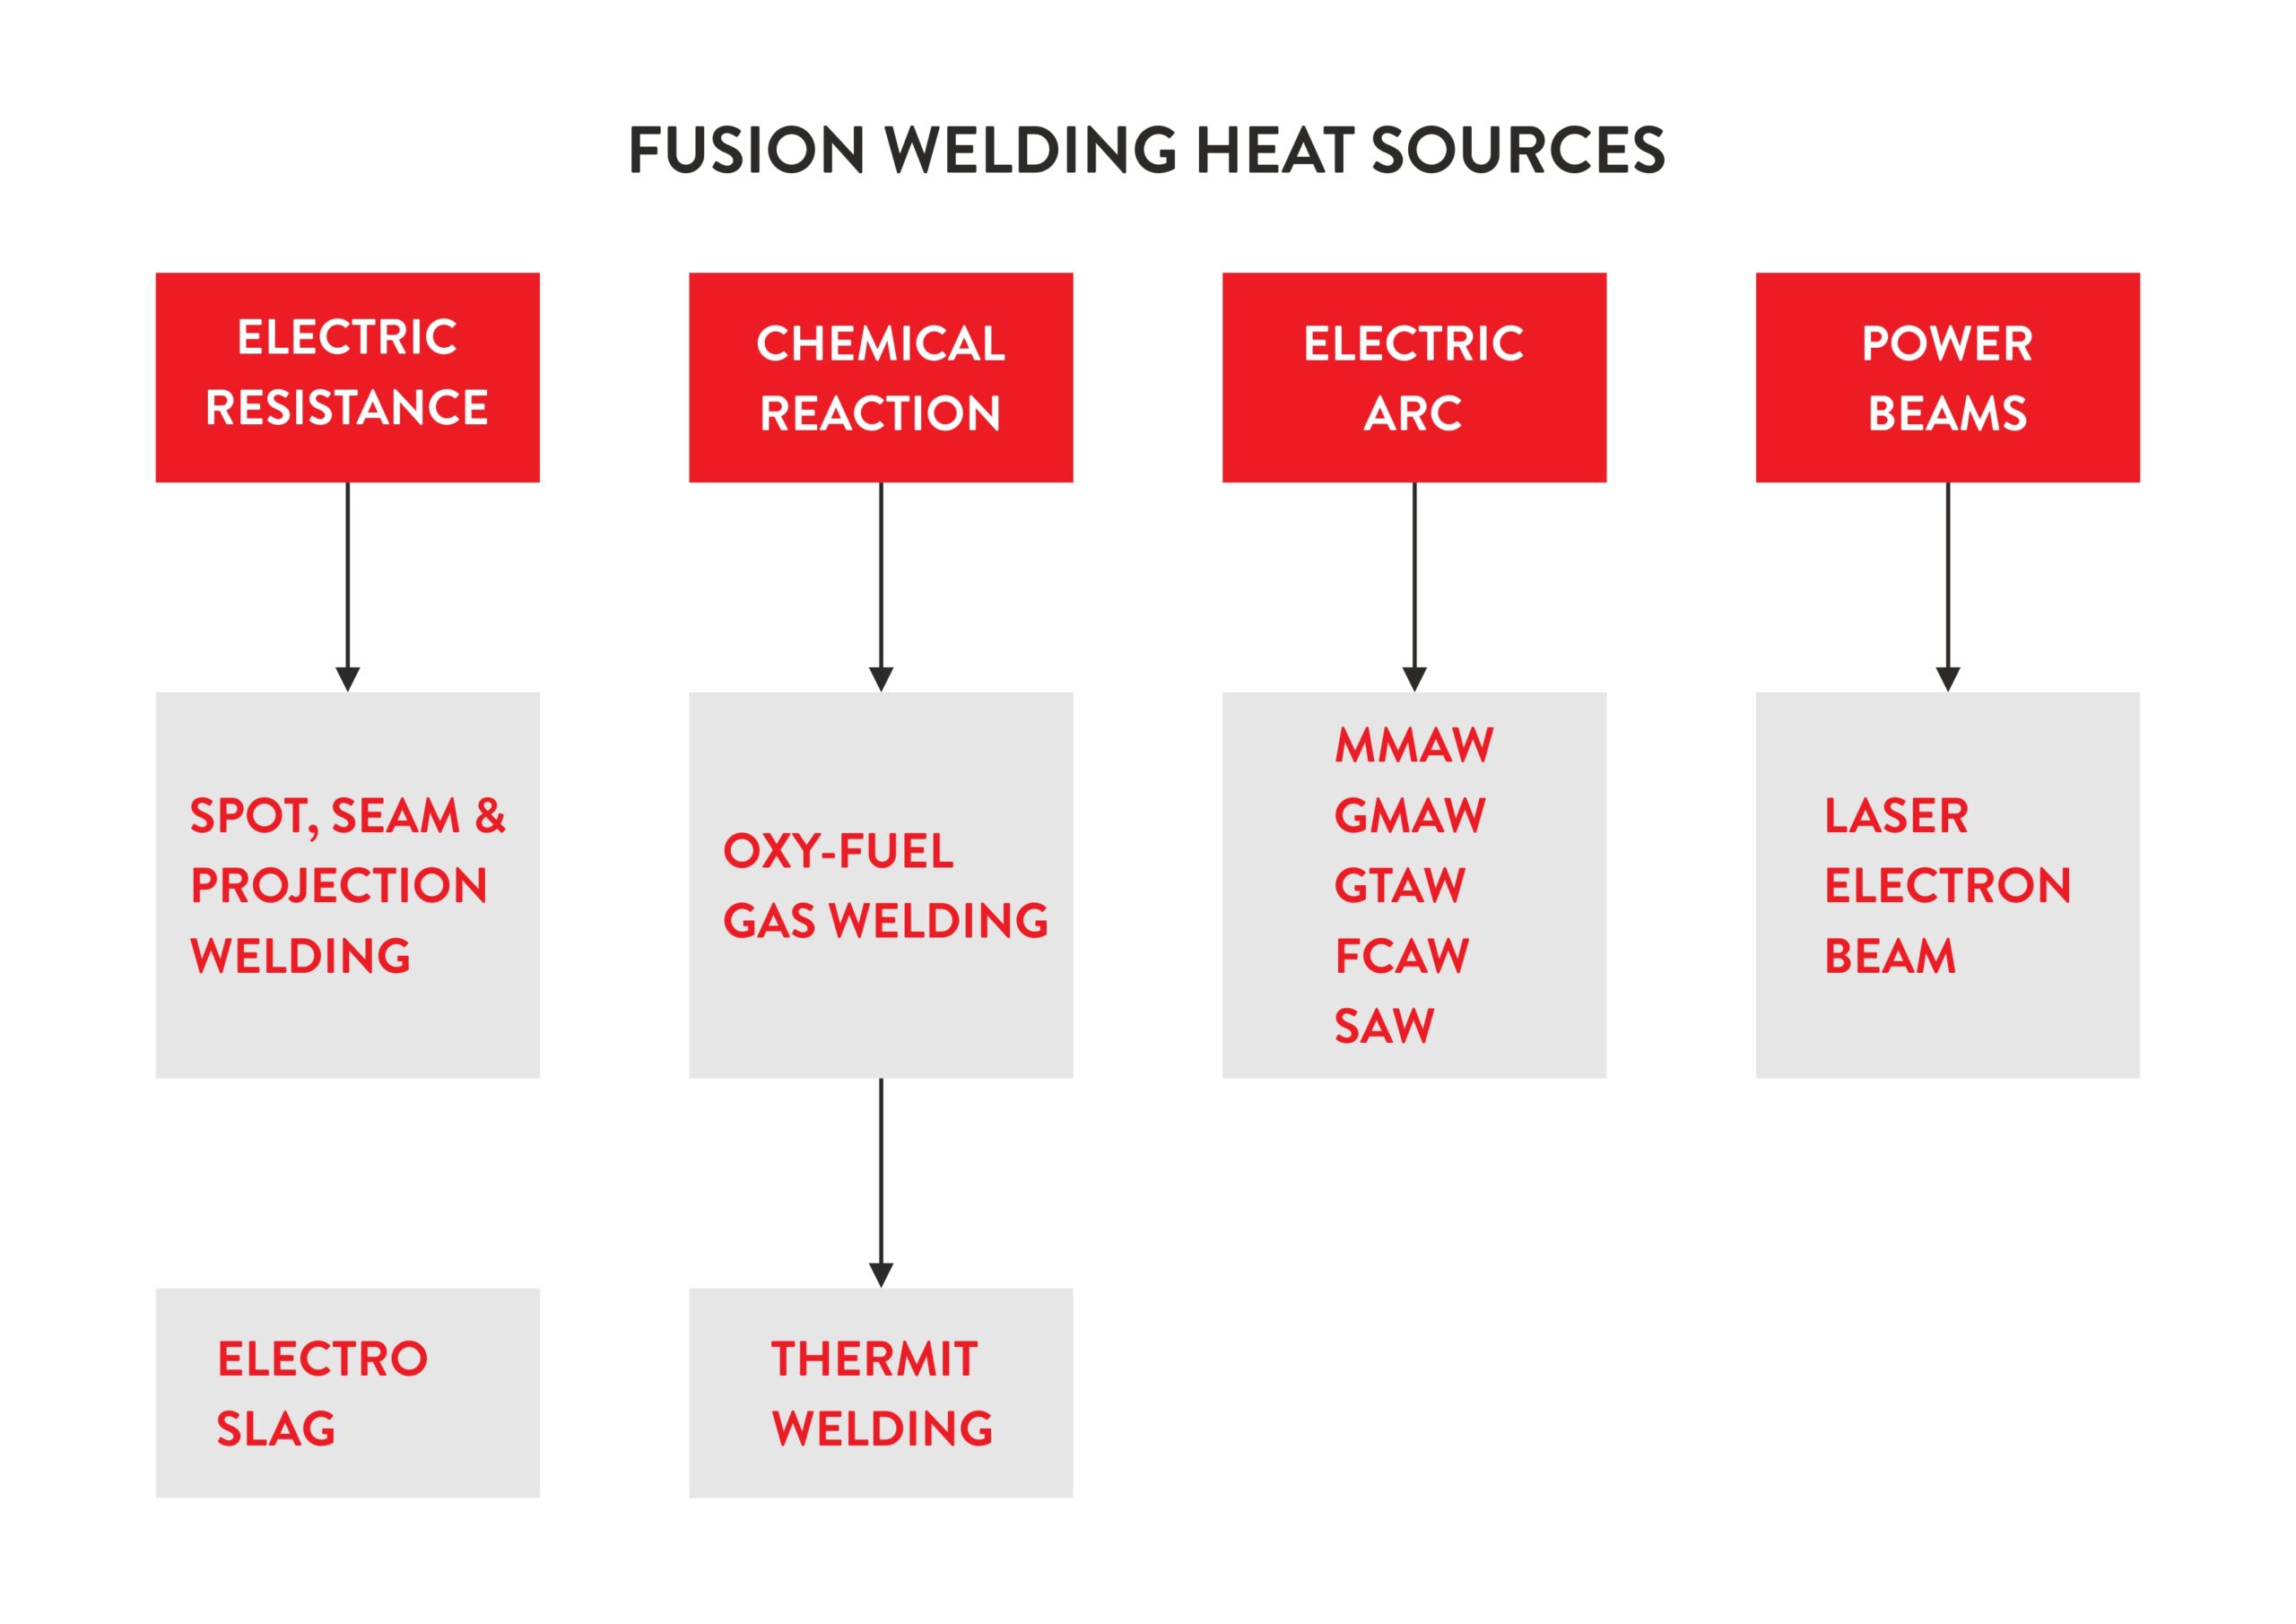 Fusion welding sources